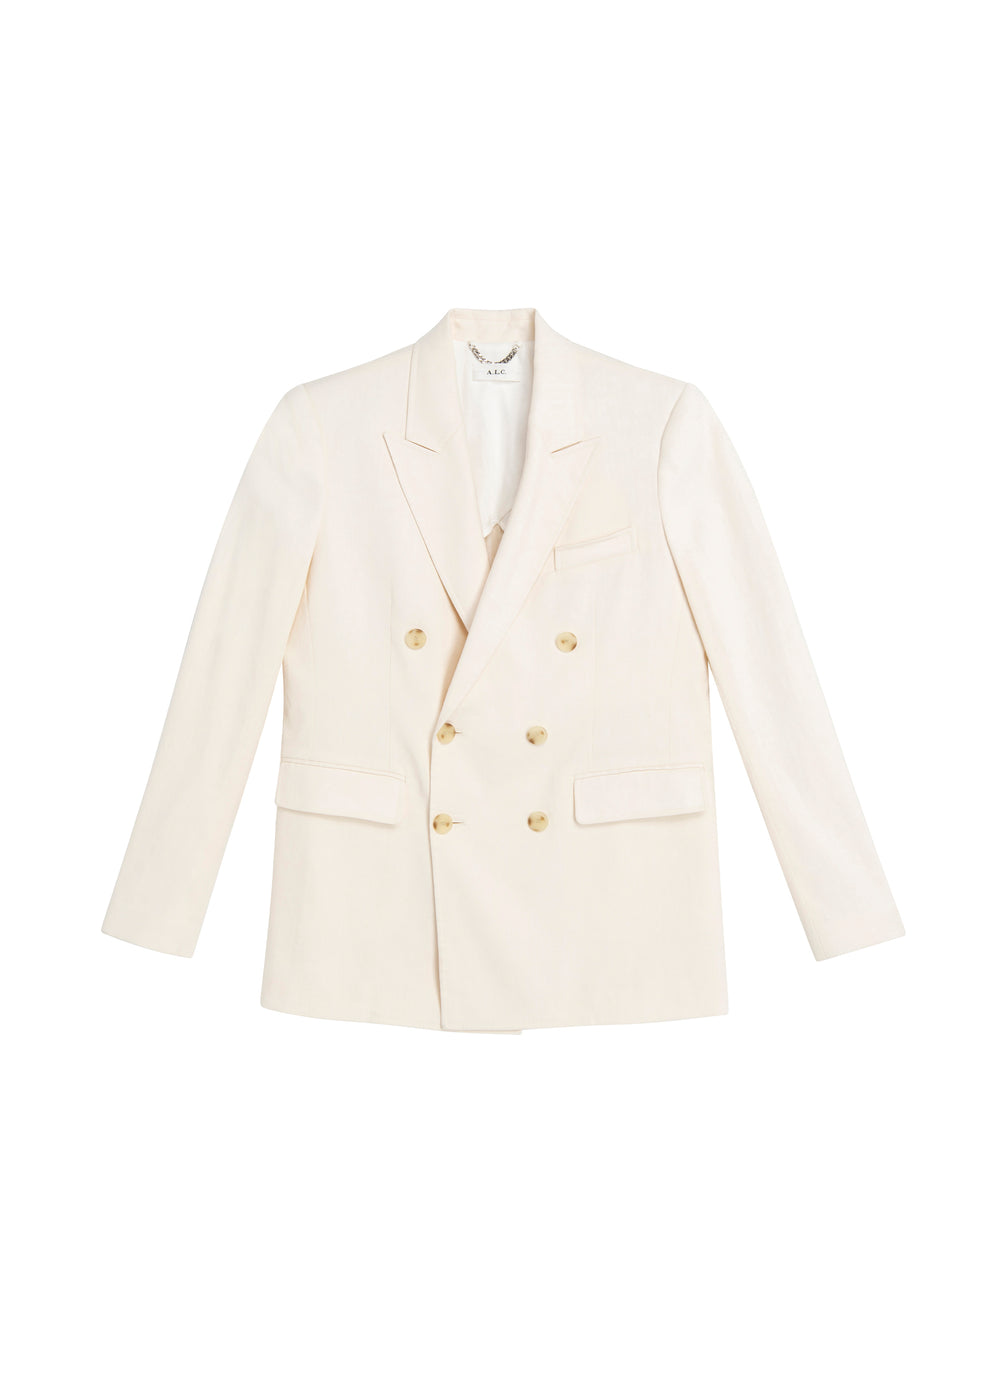 flatlay of cream suit jacket